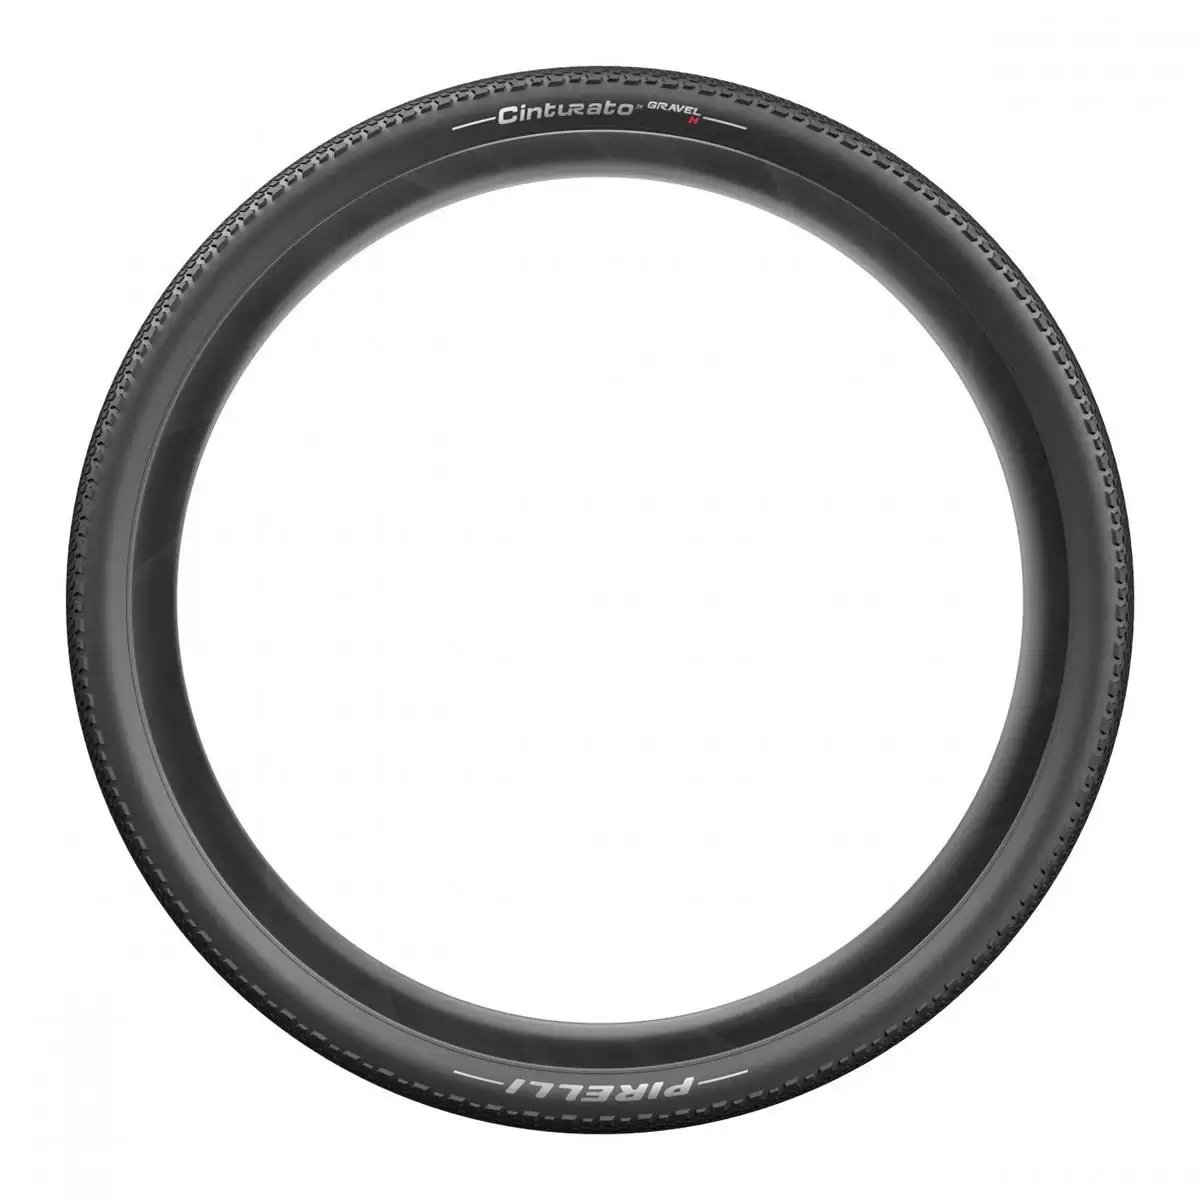 Tire Cinturato Gravel Hard Terrain 700x35c Tubeless Ready Black #3